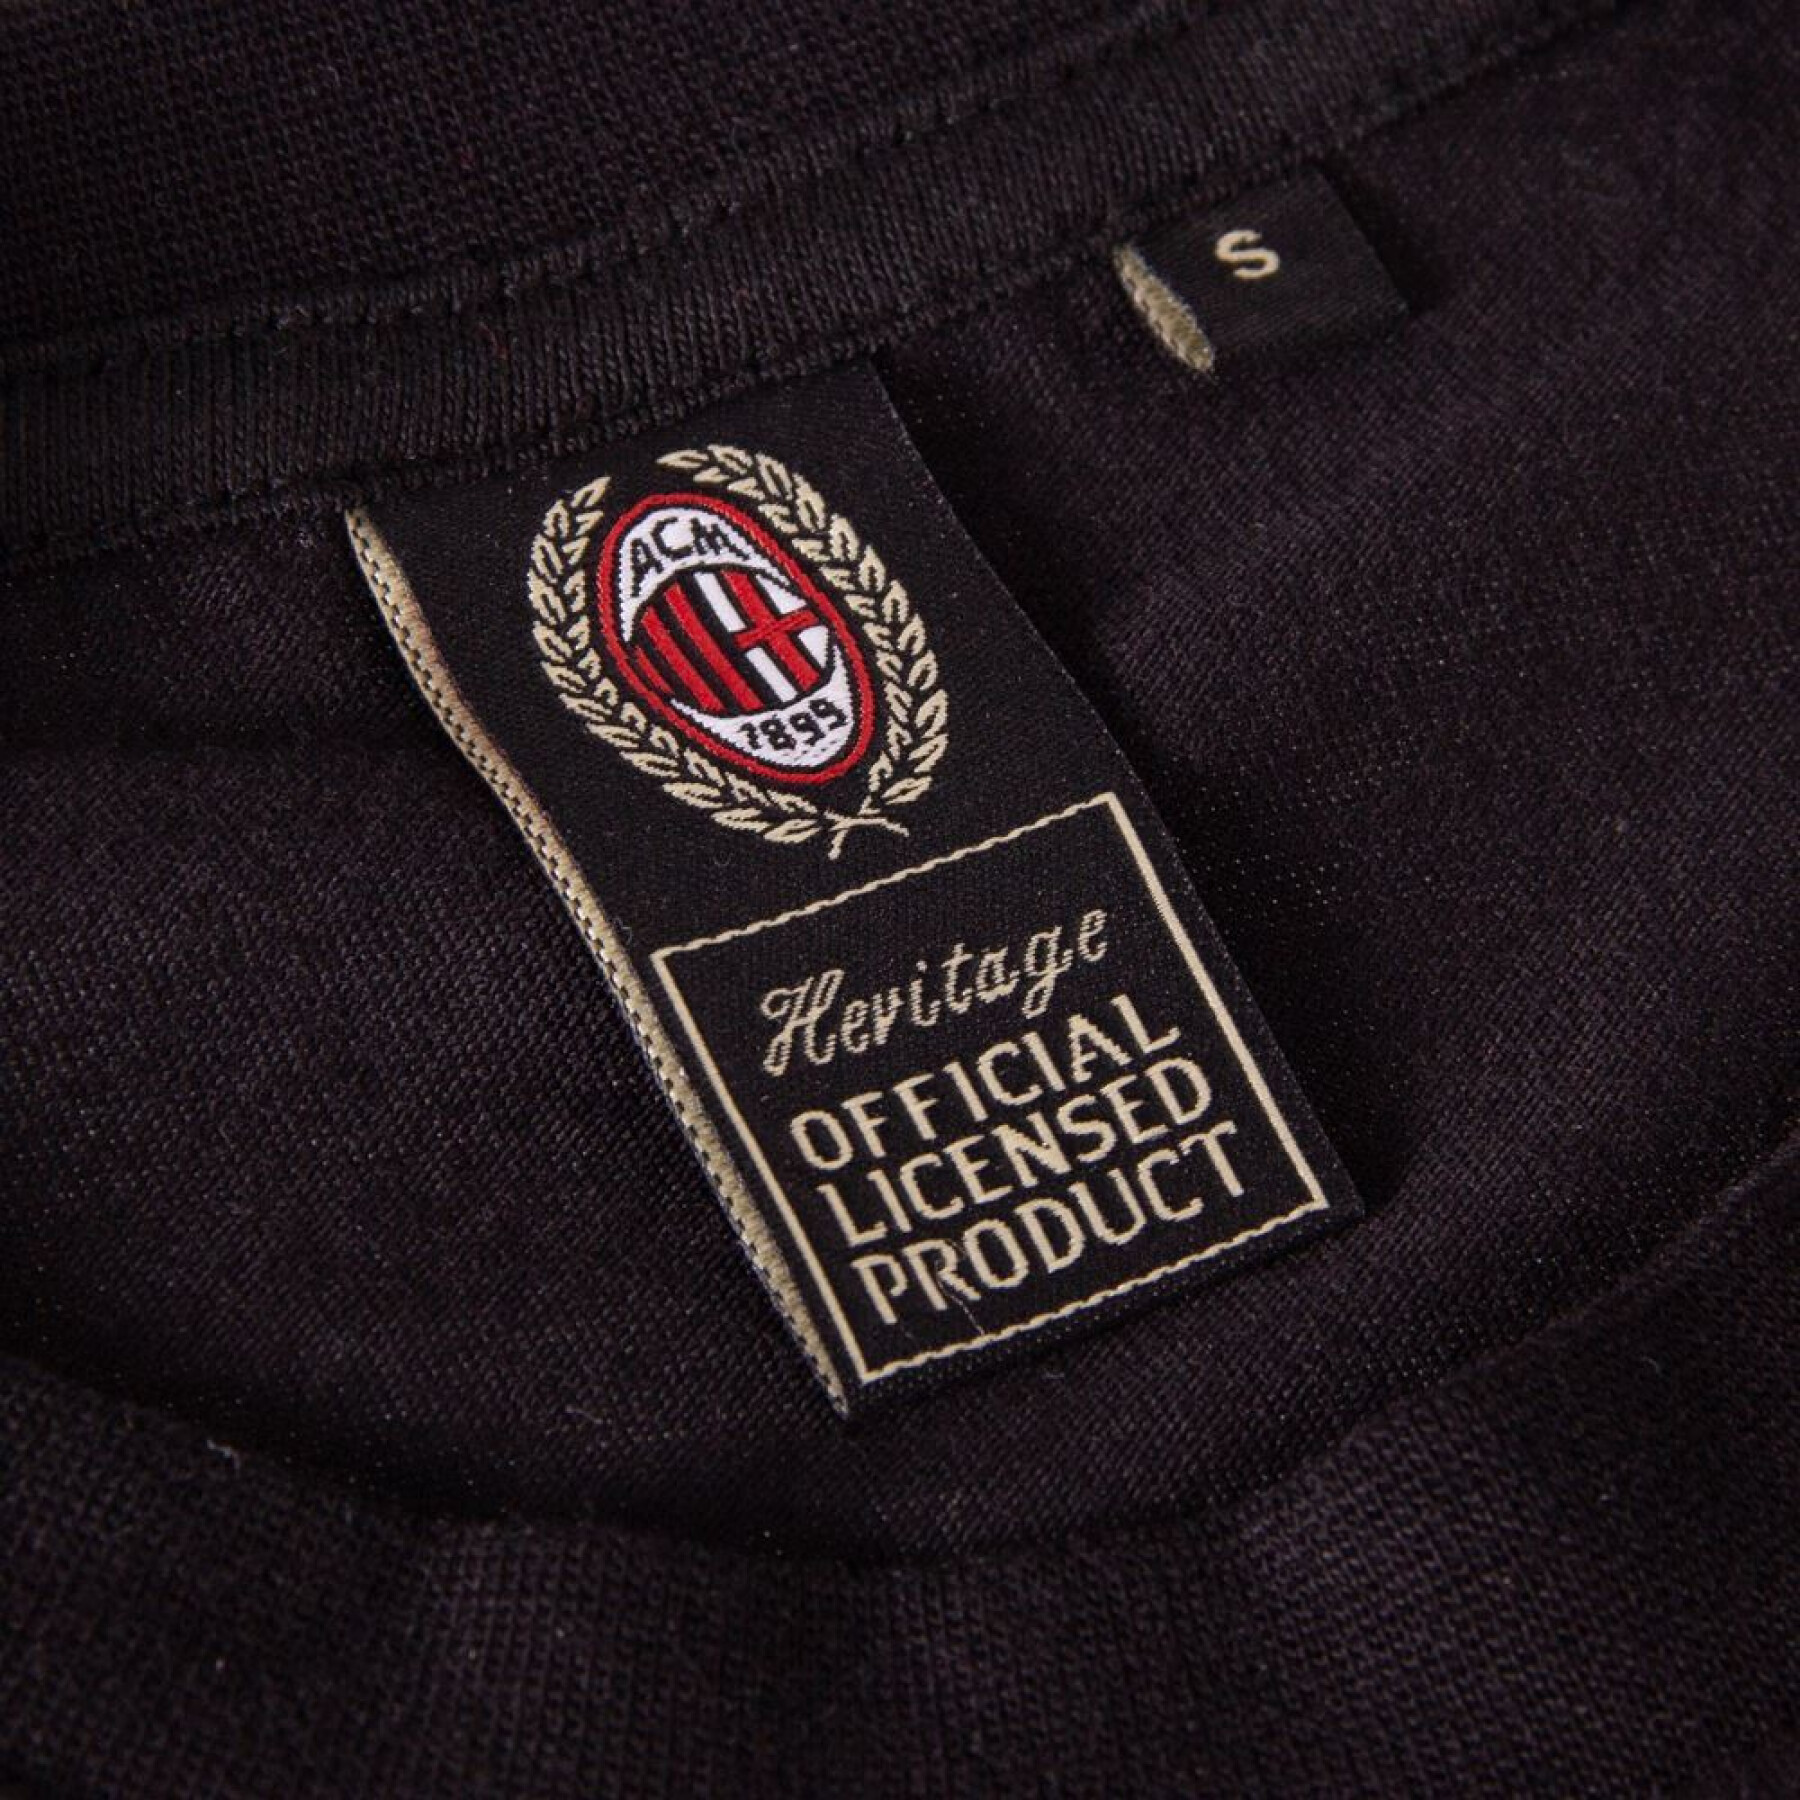 T-Shirt Milan AC CL 2003/04